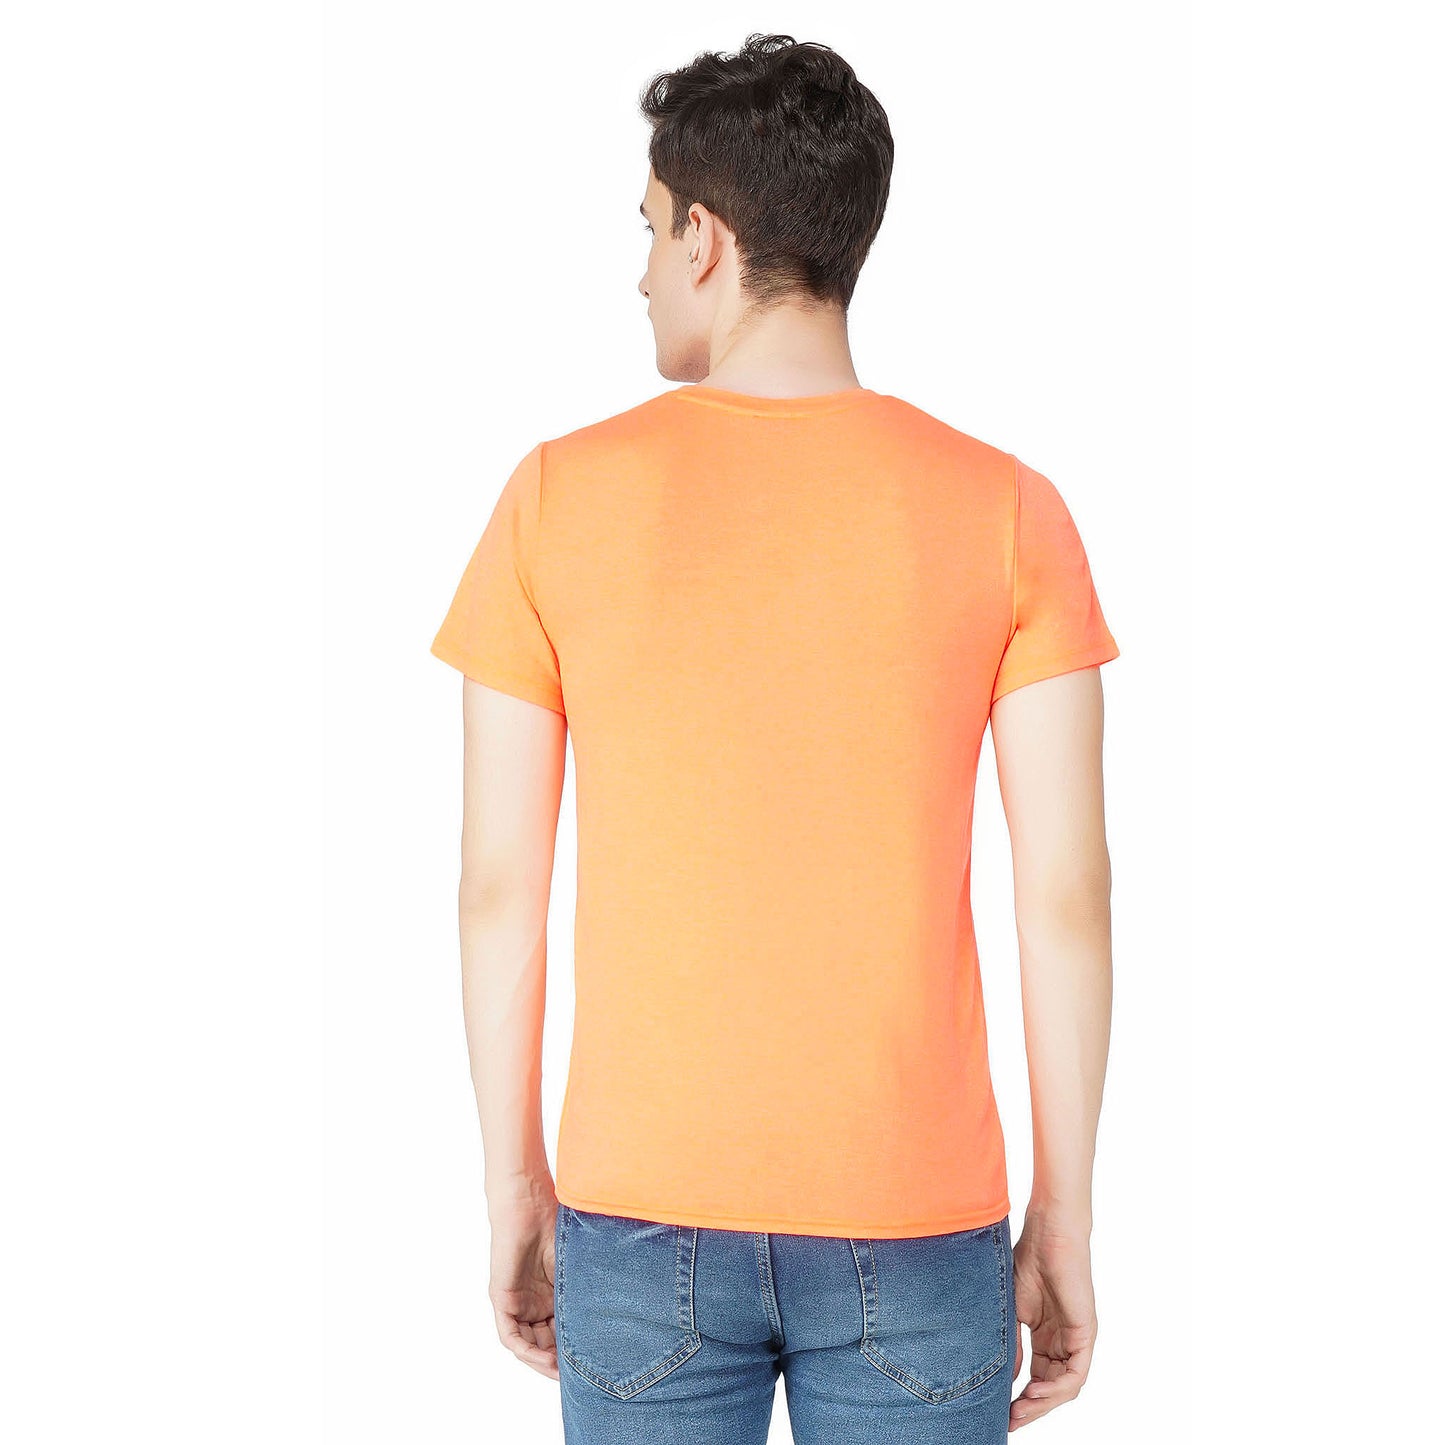 SLAY. Sport Men's Printed Neon Orange T-shirt-clothing-to-slay.myshopify.com-T-Shirt